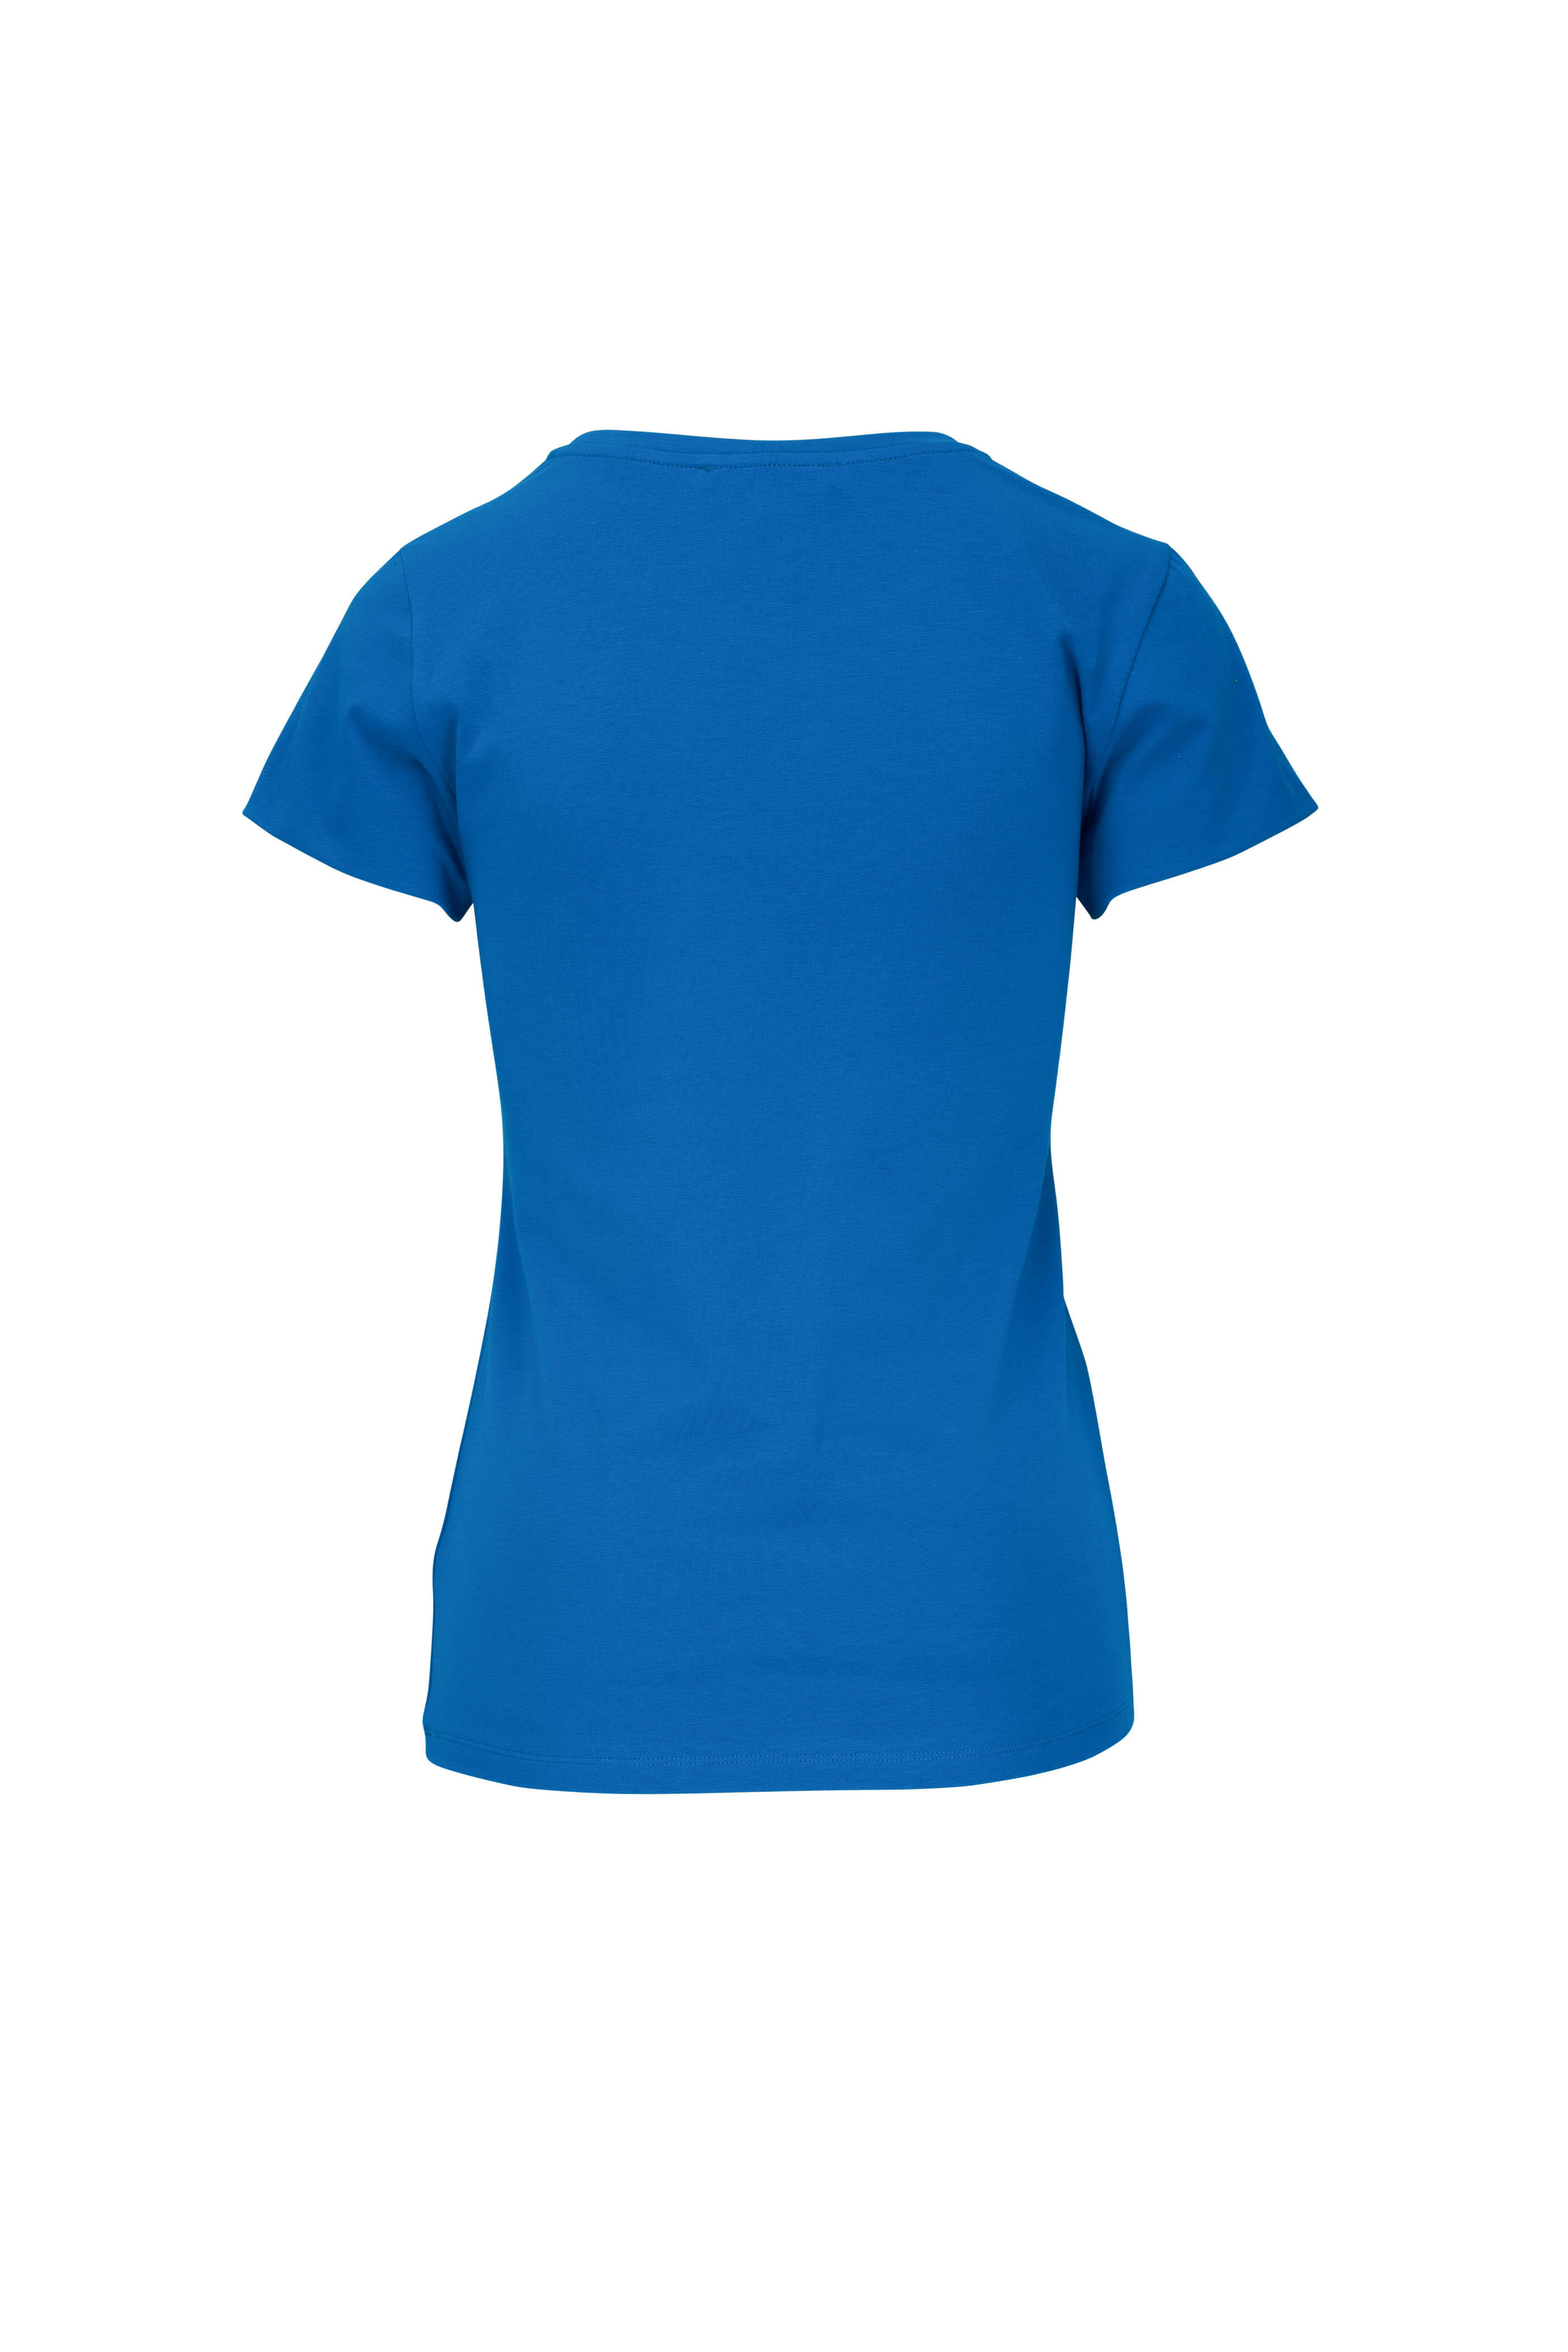 Dorothee Schumacher - All Time Favorites Aqua Blue T-Shirt